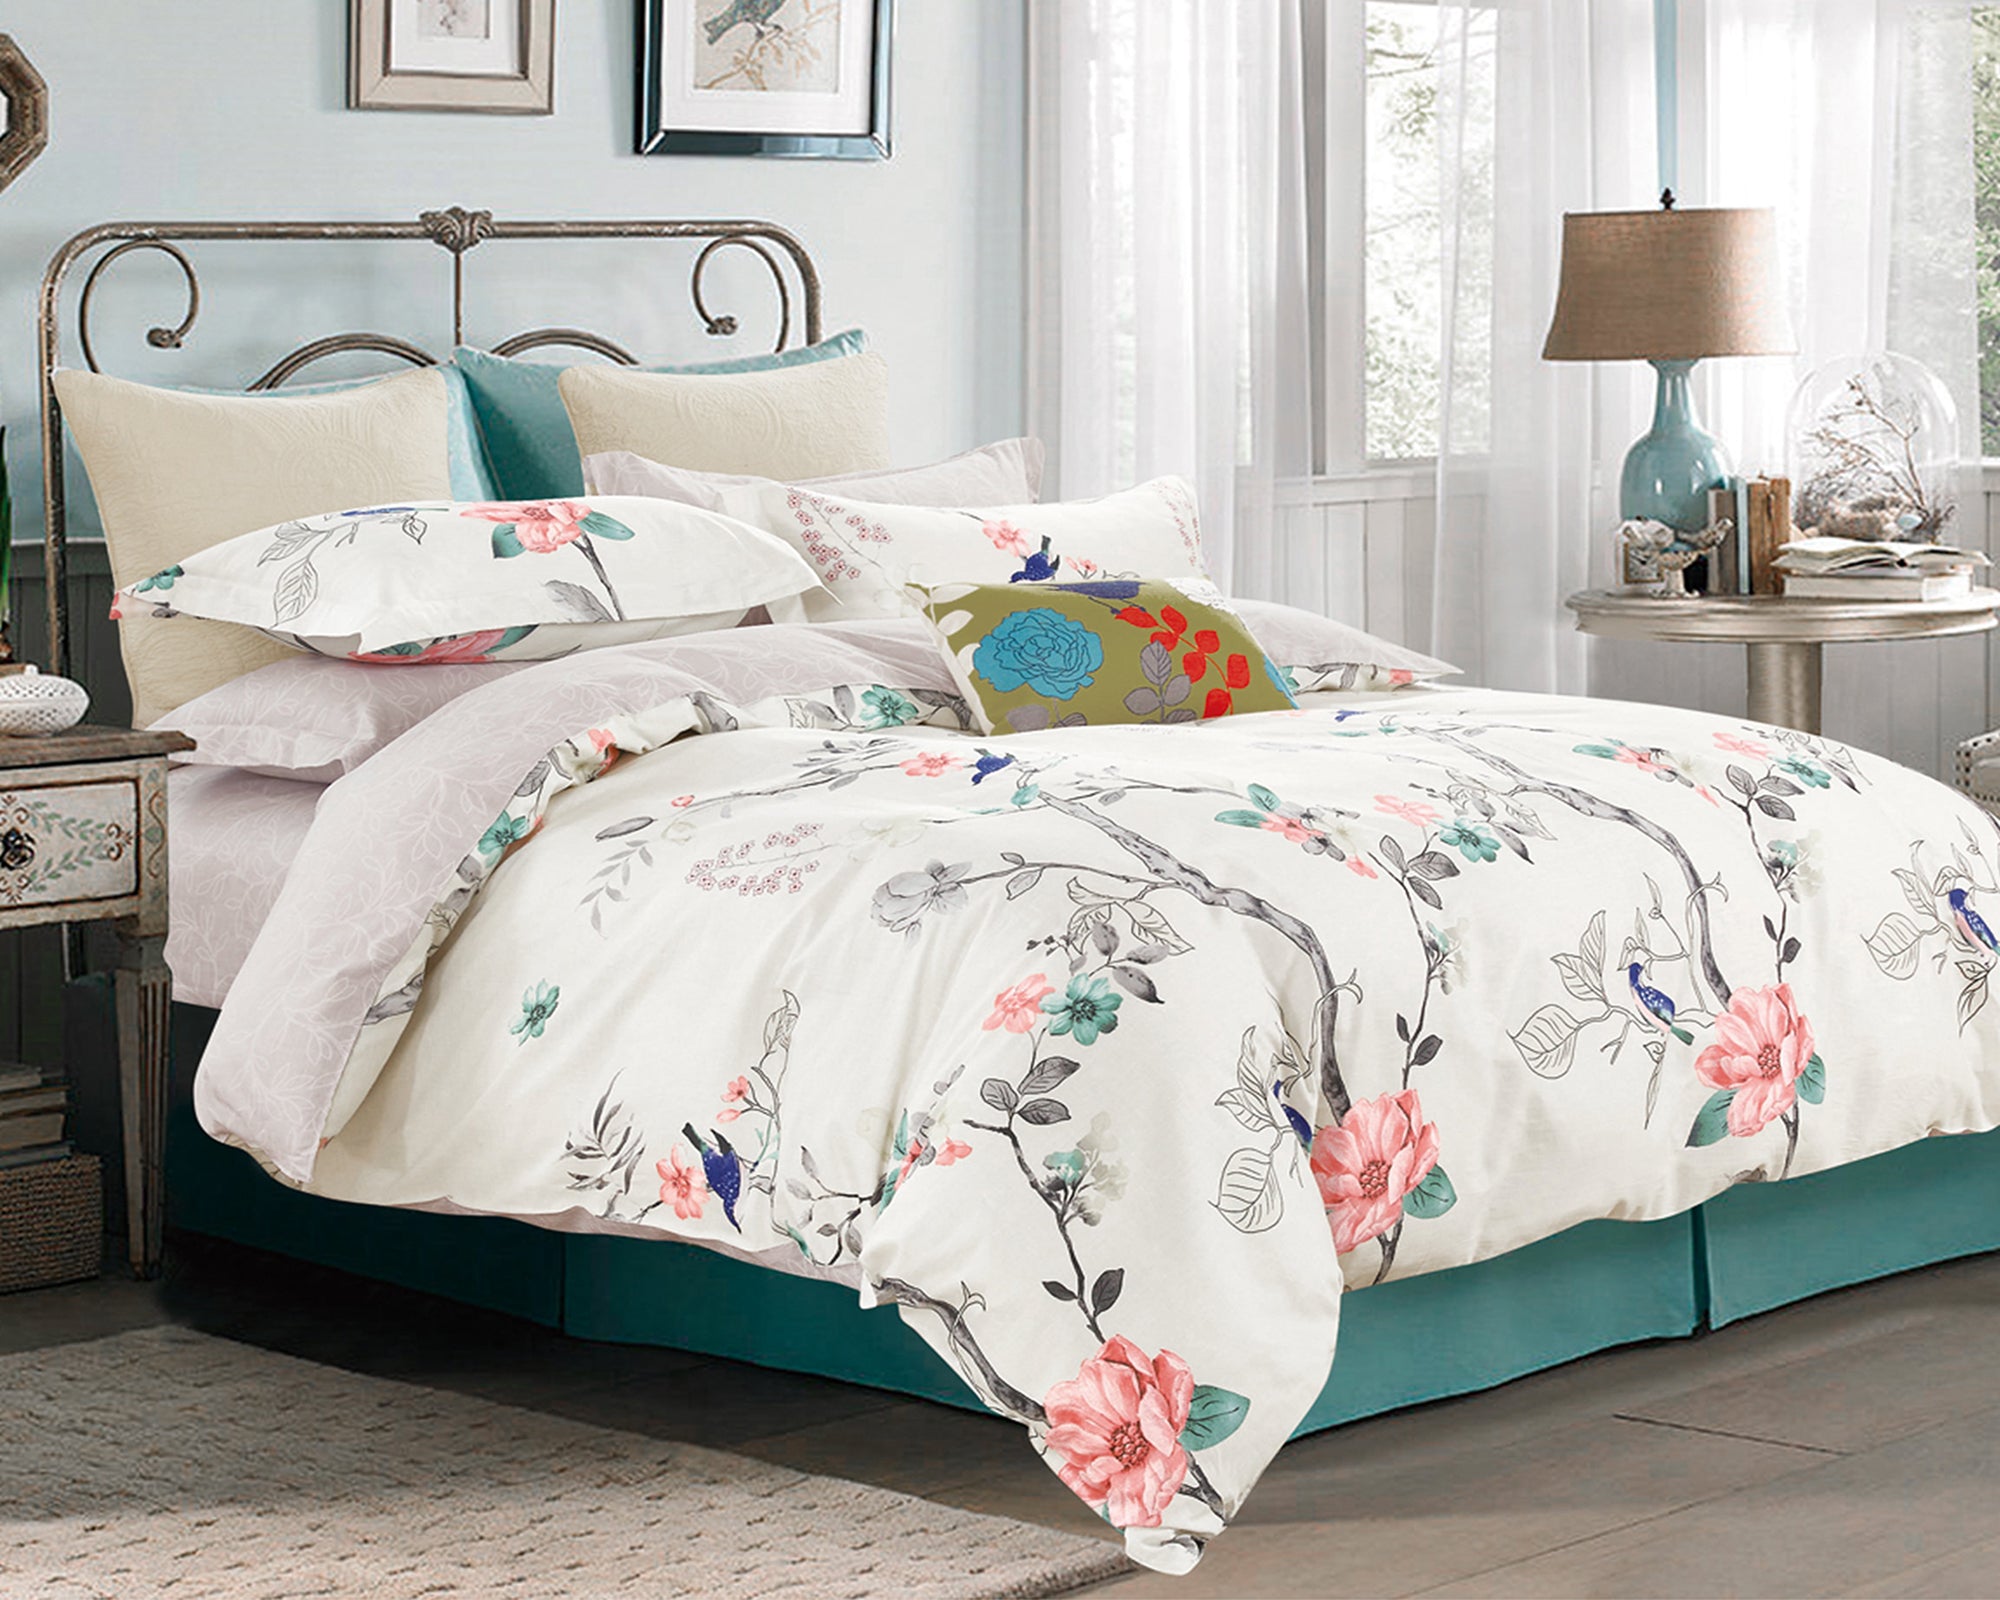 Oriental Style 100% Cotton Bedding Set: Duvet Cover + Pillow Shams (or + Both Pillow Shams and Pillowcases)